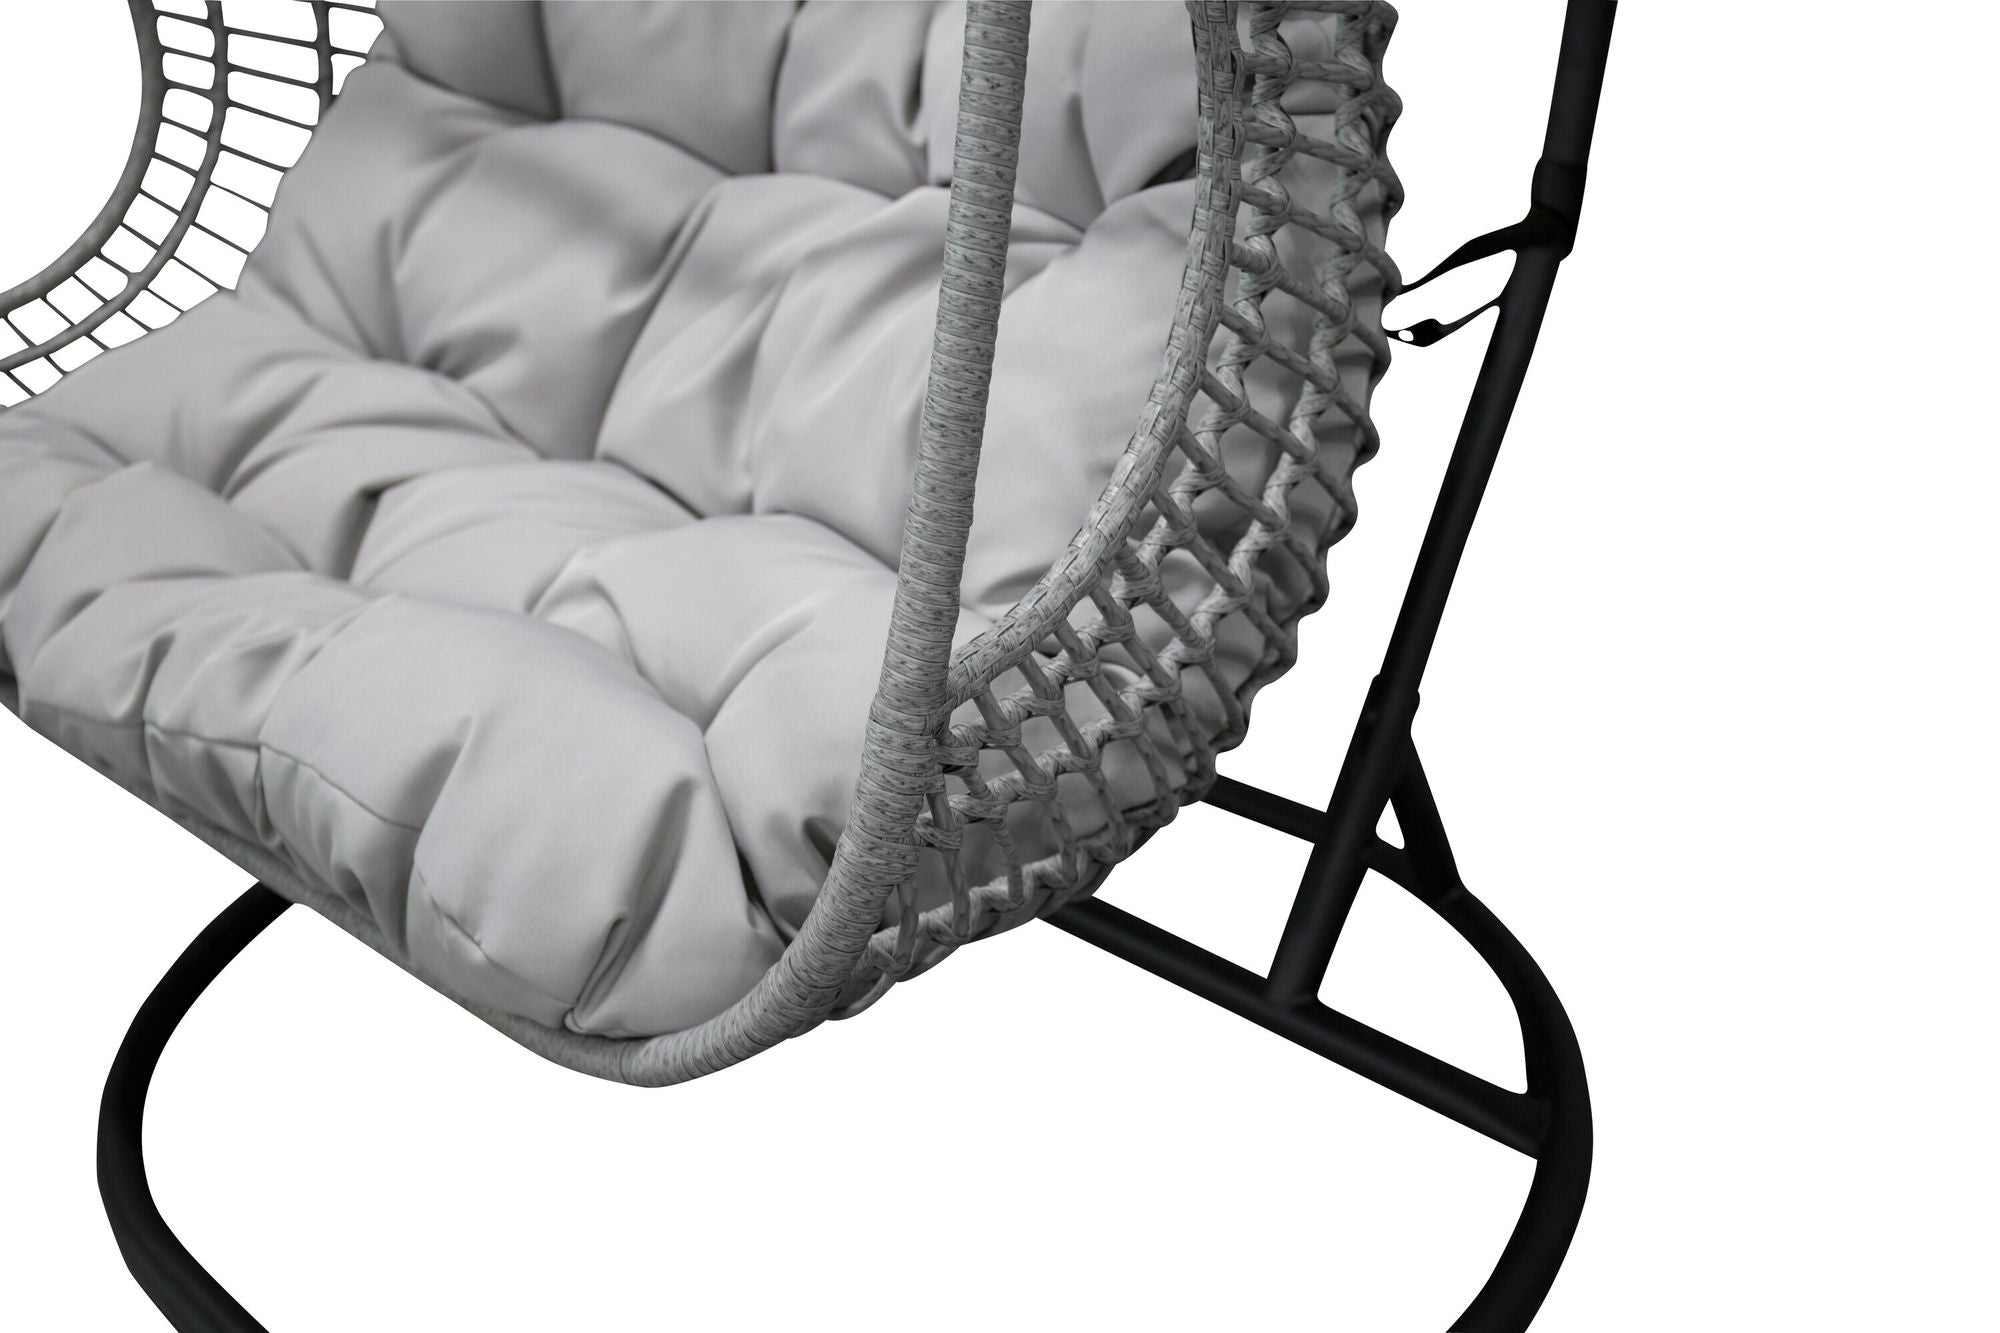 Venture Home Viga Double Hanging Chair - Black Frame / Grey Wicker / Grey Cushion